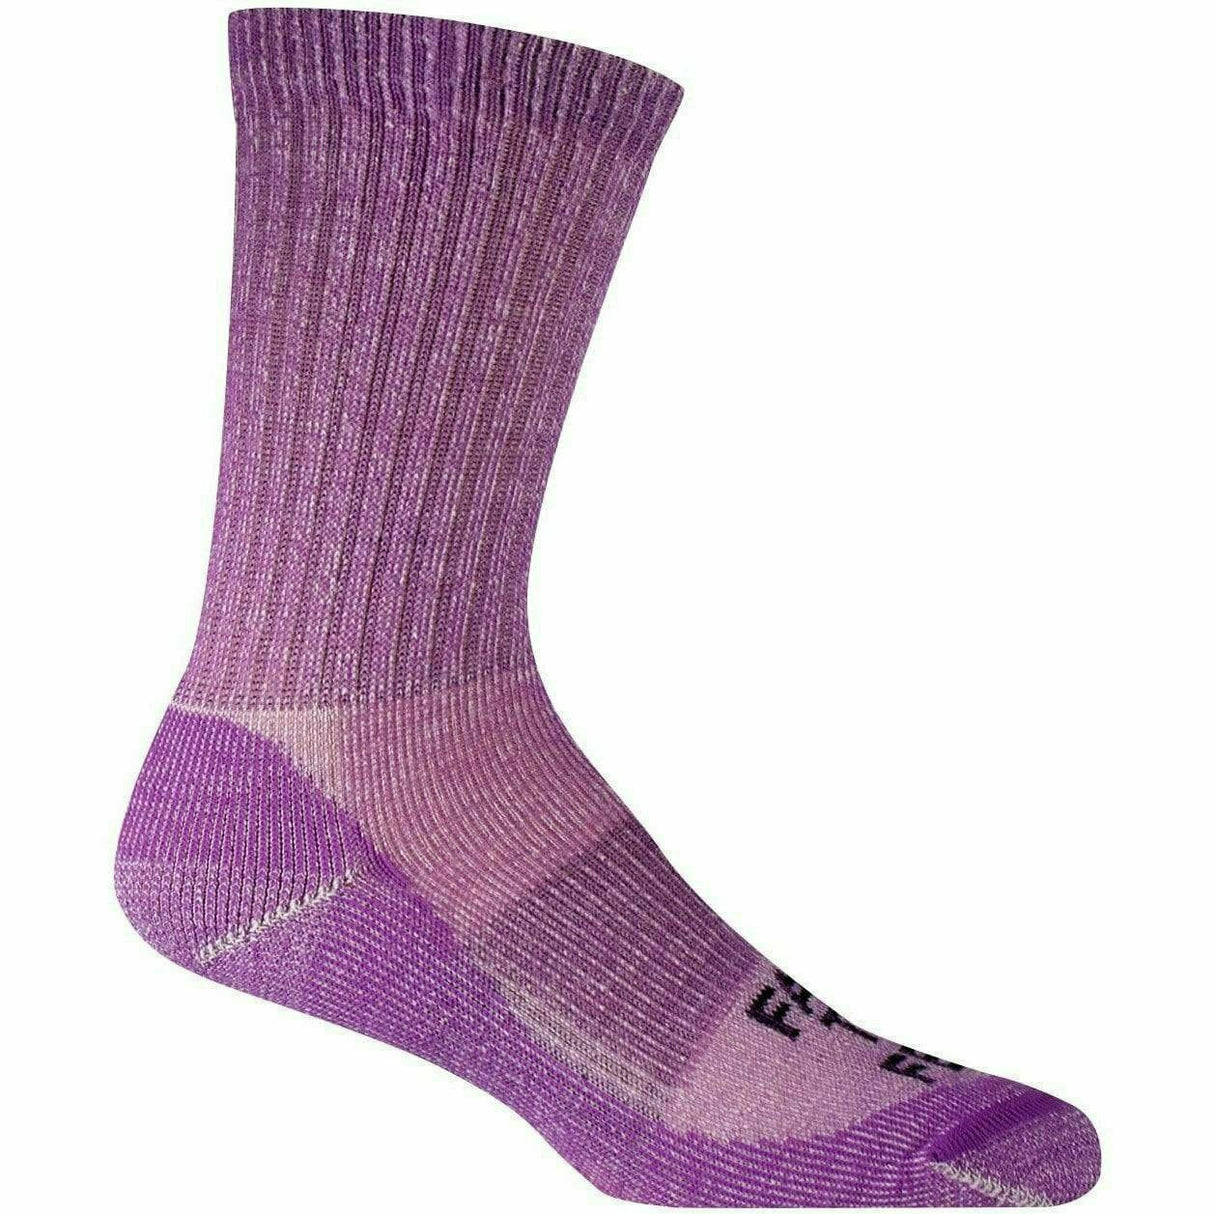 Farm to Feet Boulder Light Cushion Hiking Socks  -  Small / Bright Violet